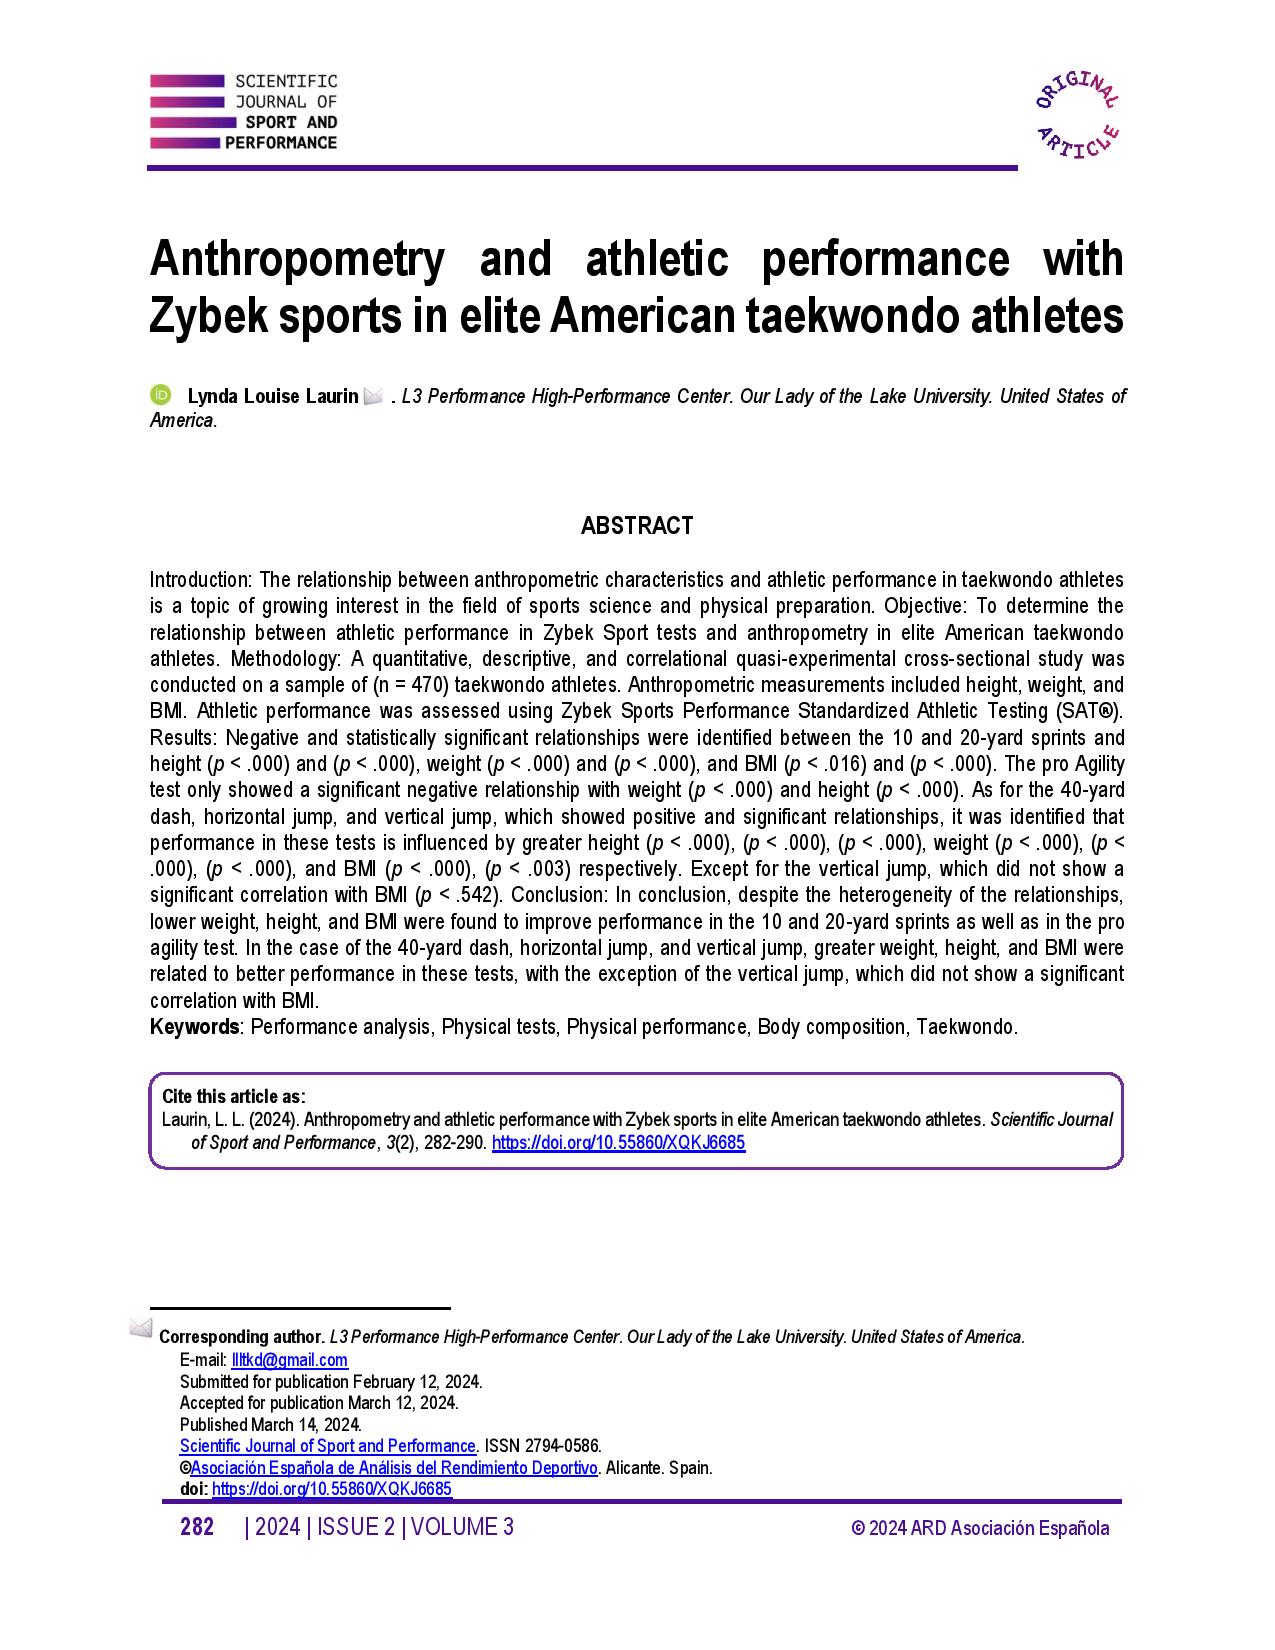 Anthropometry and athletic performance with Zybek sports in elite American taekwondo athletes